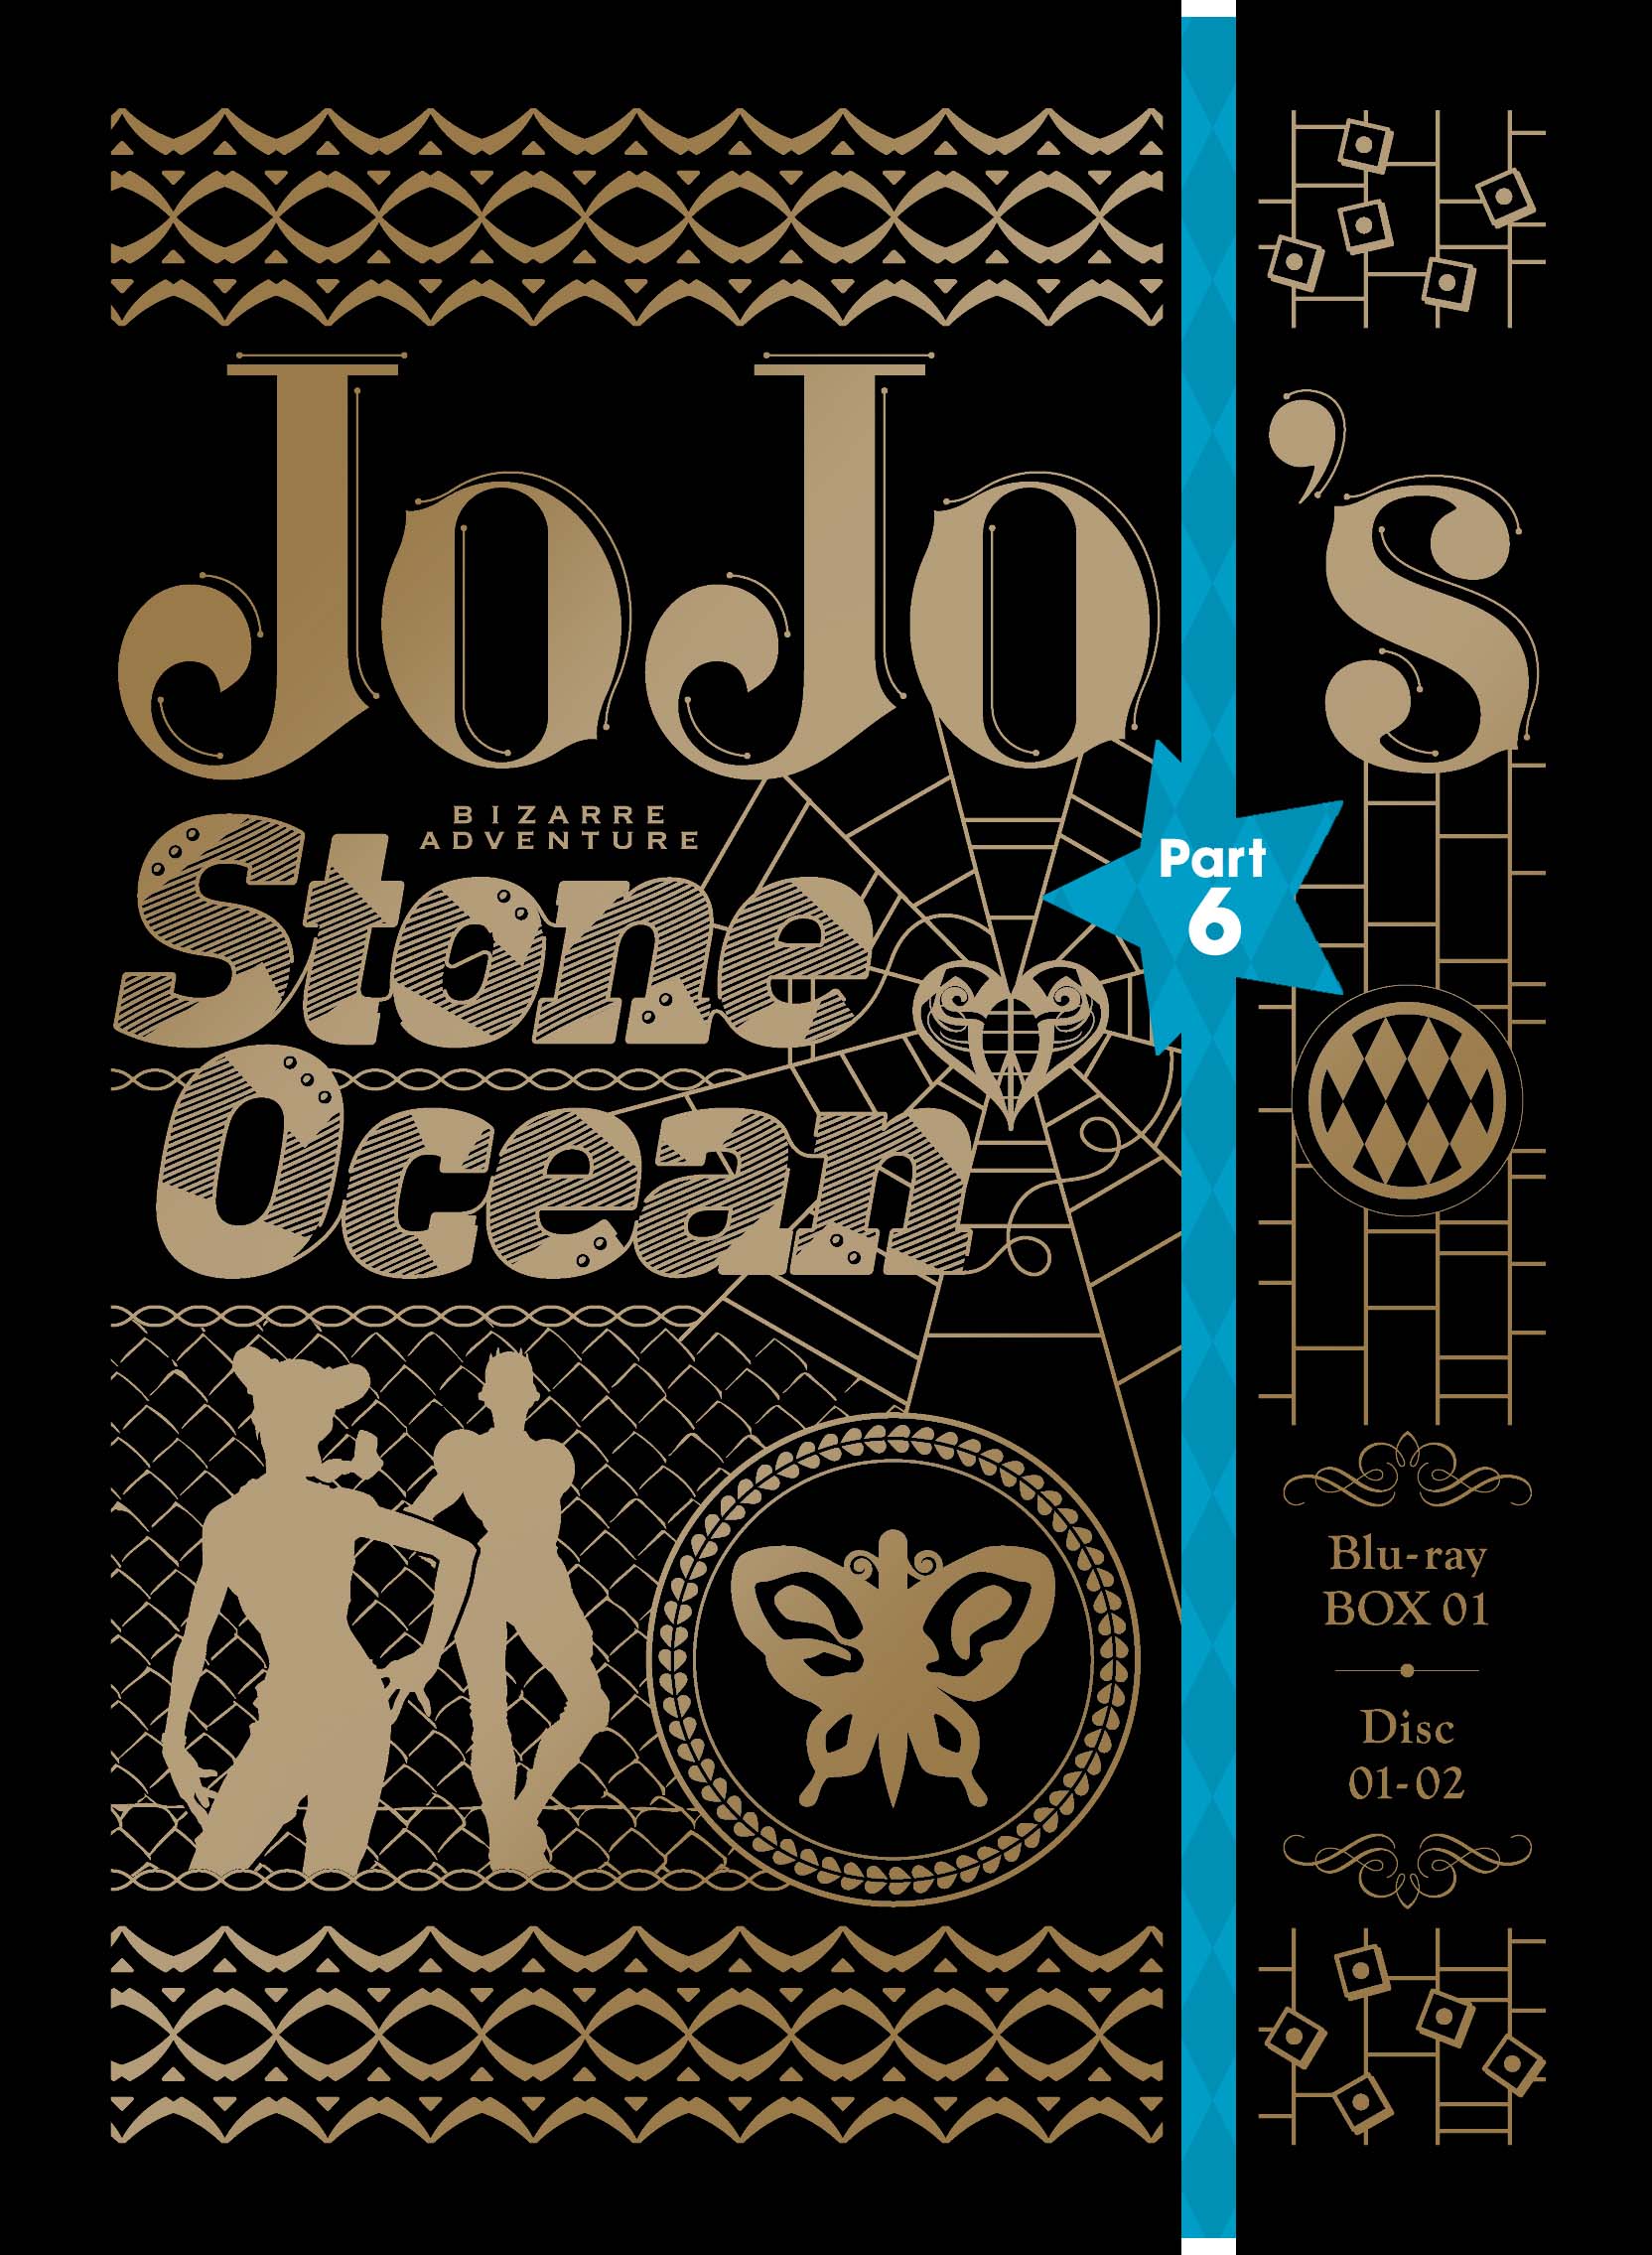 JoJo's Bizarre Encyclopedia on X: STONE OCEAN Opening Concept Art